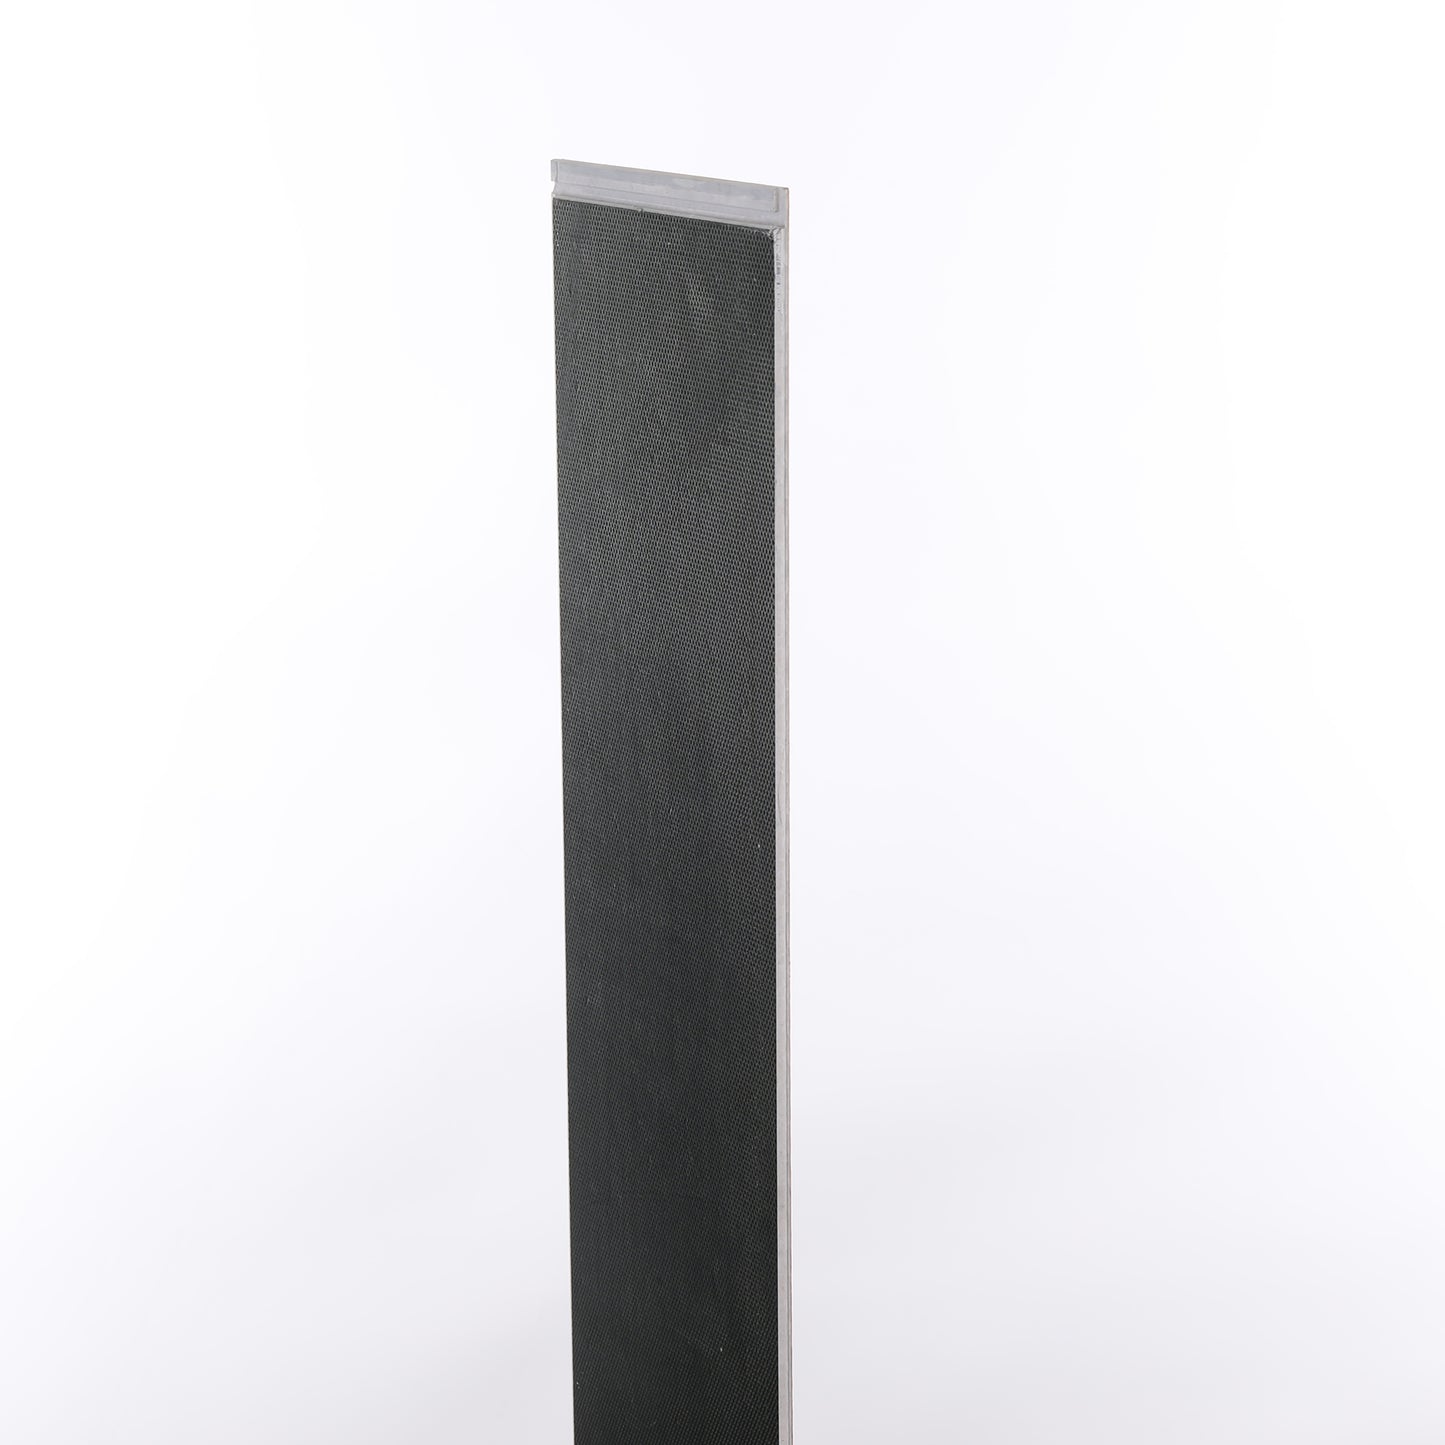 7mm Honeystone Waterproof Engineered Strand Bamboo Flooring 5.12 in. Wide x 36.22 in. Long